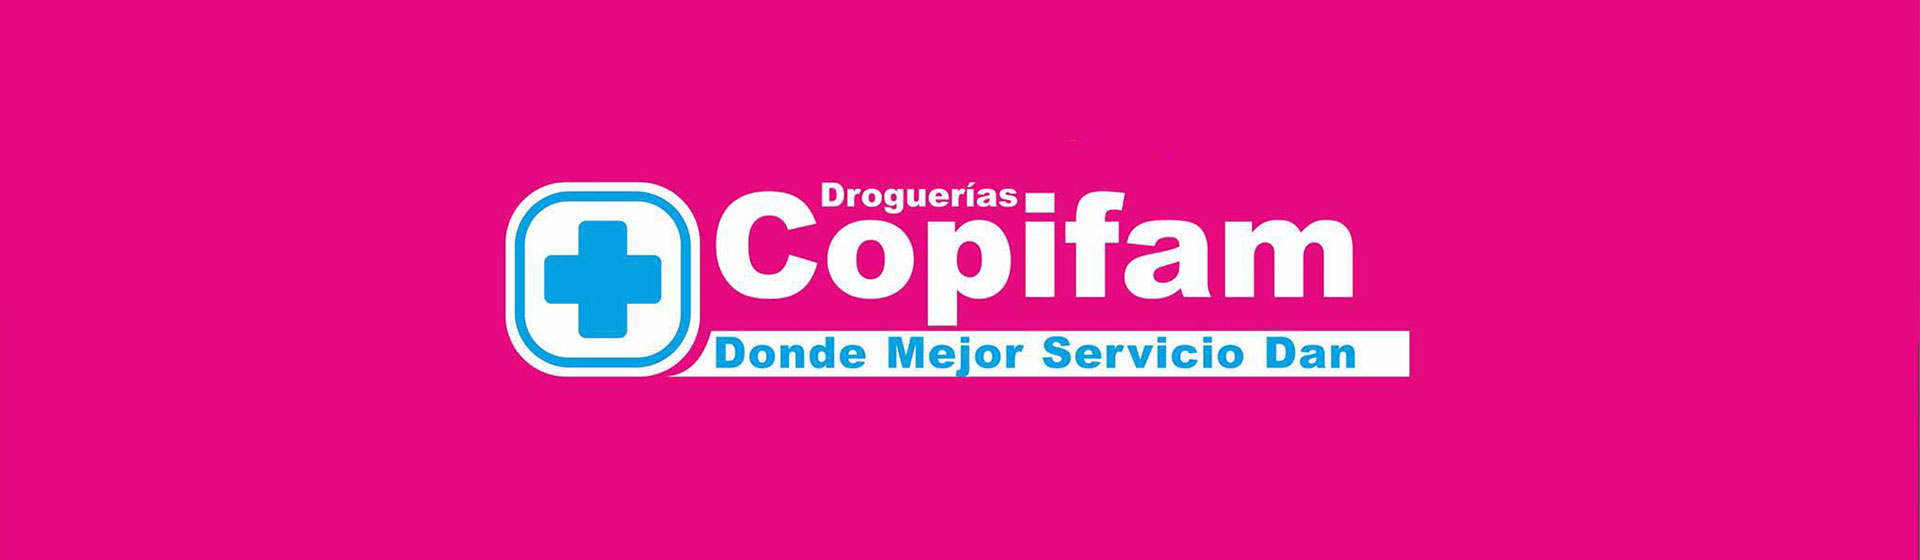 copifam-banner